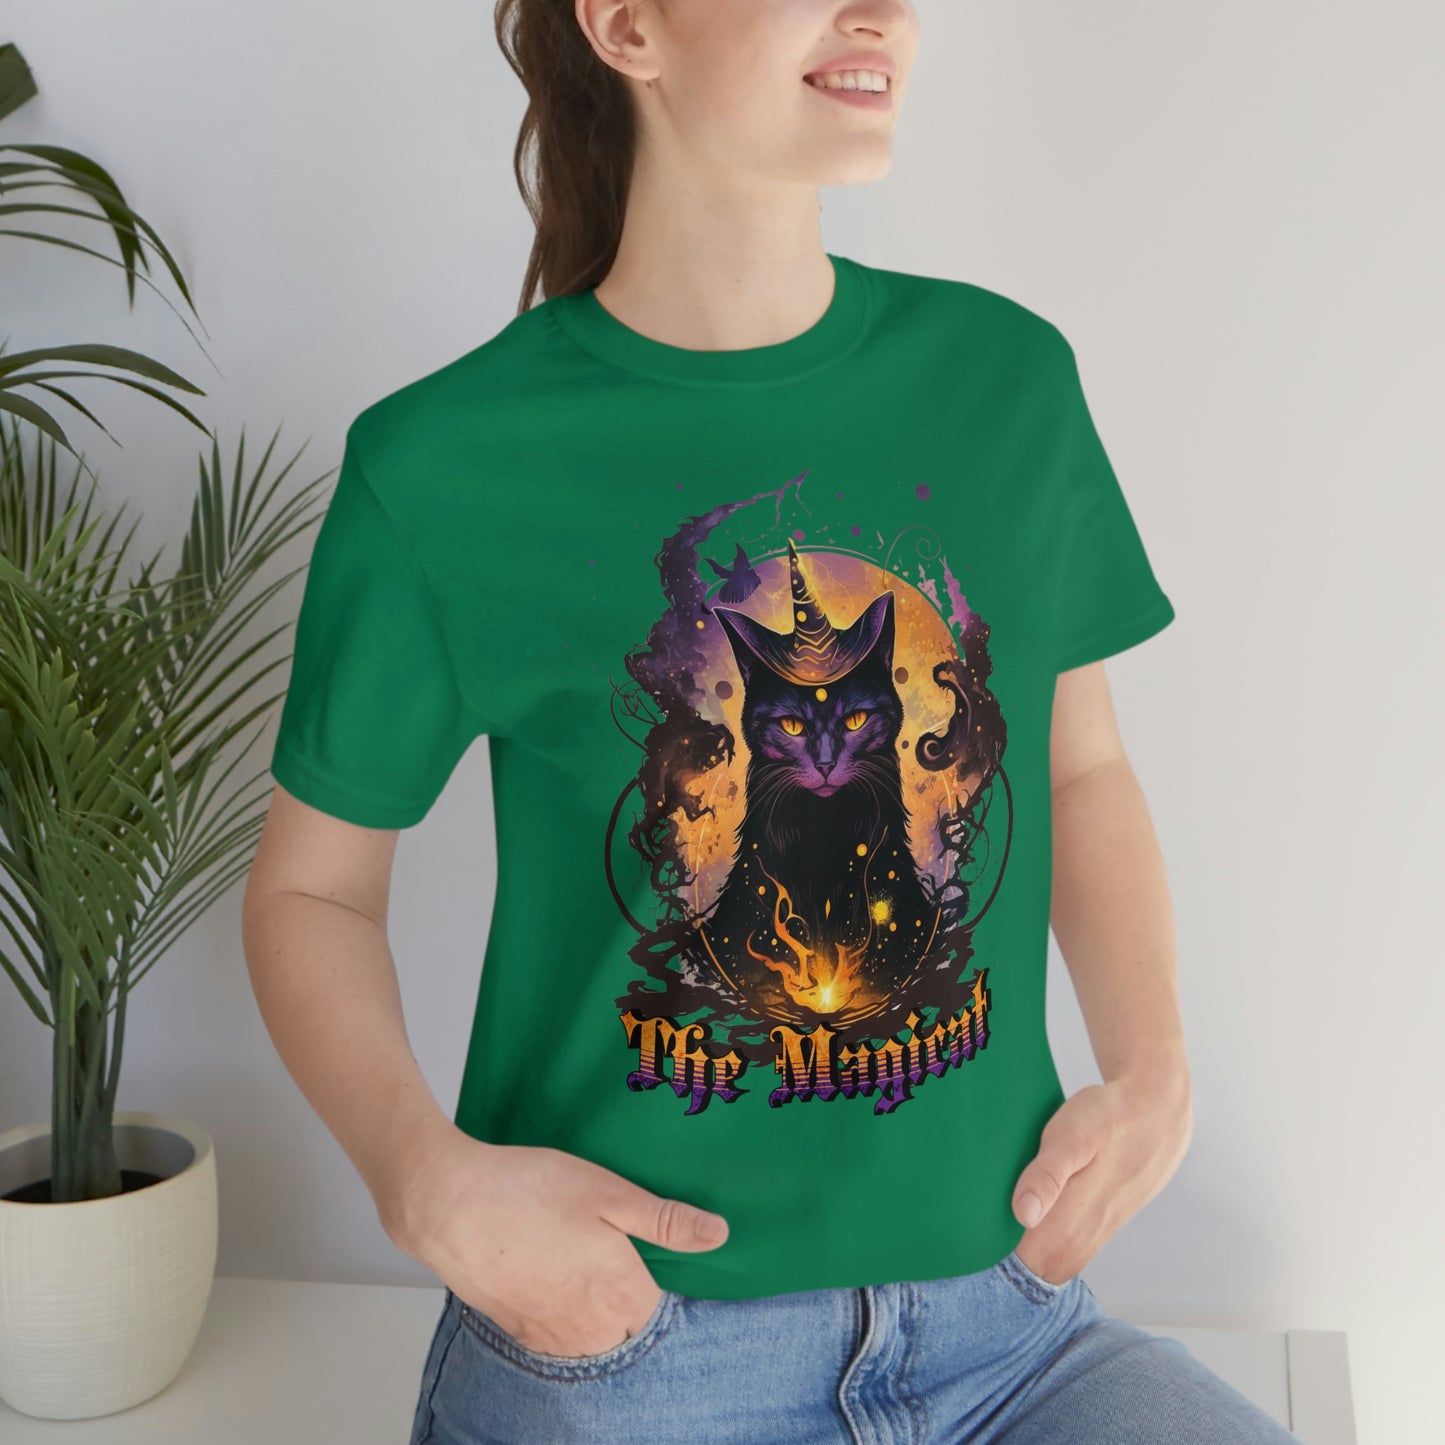 The Magicat T-shirt